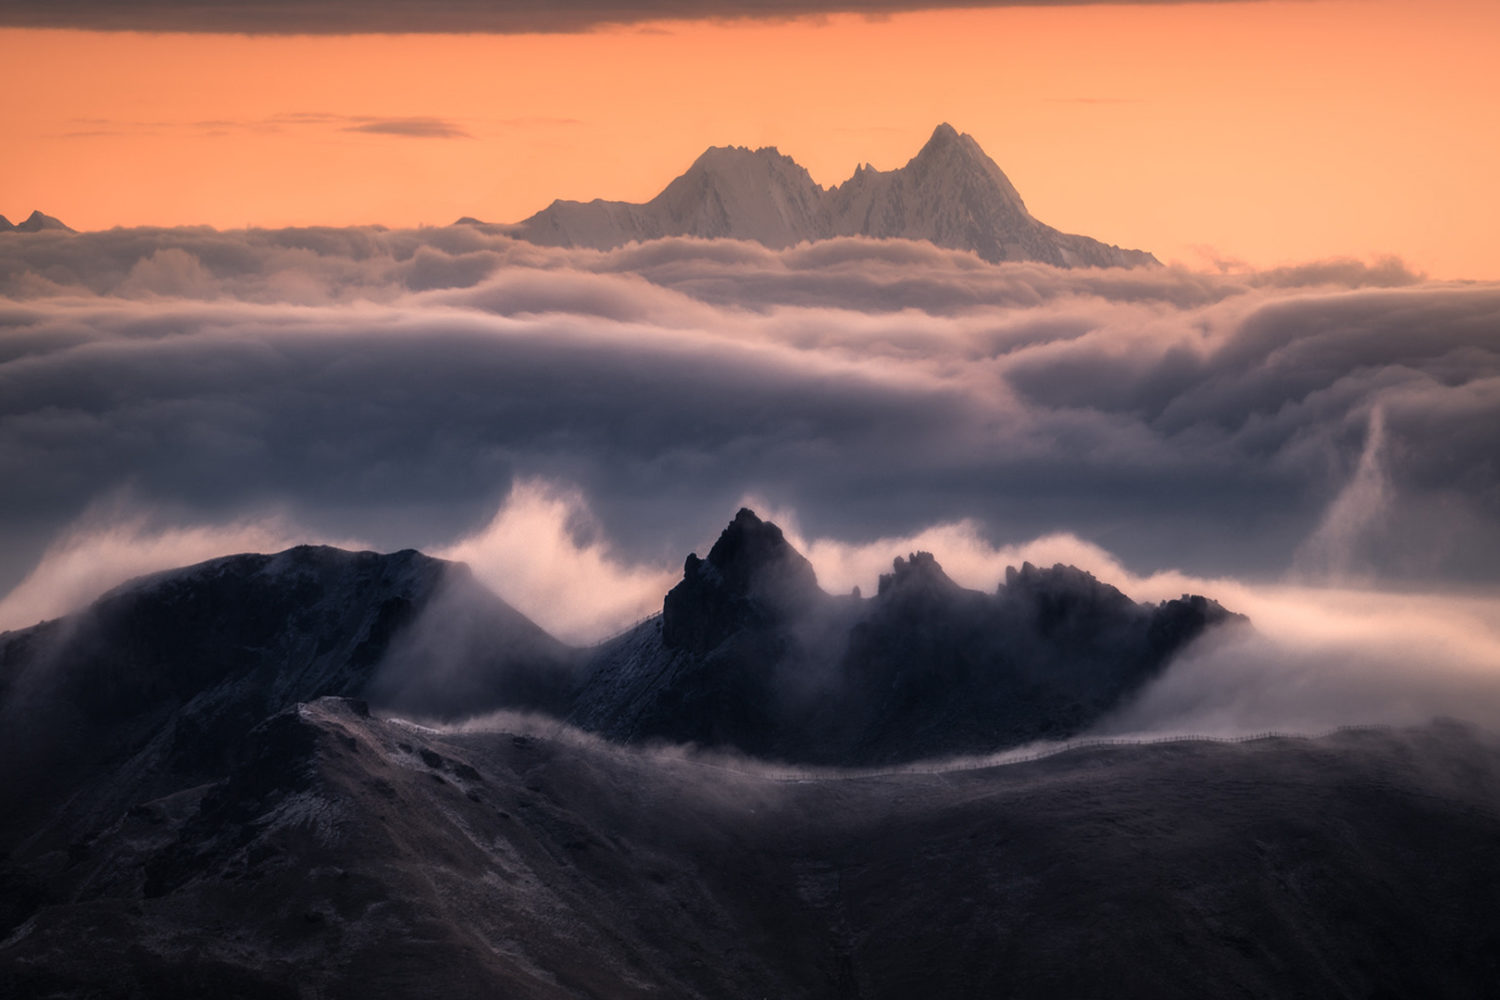 Expert tips on capturing moody, misty mountain photos